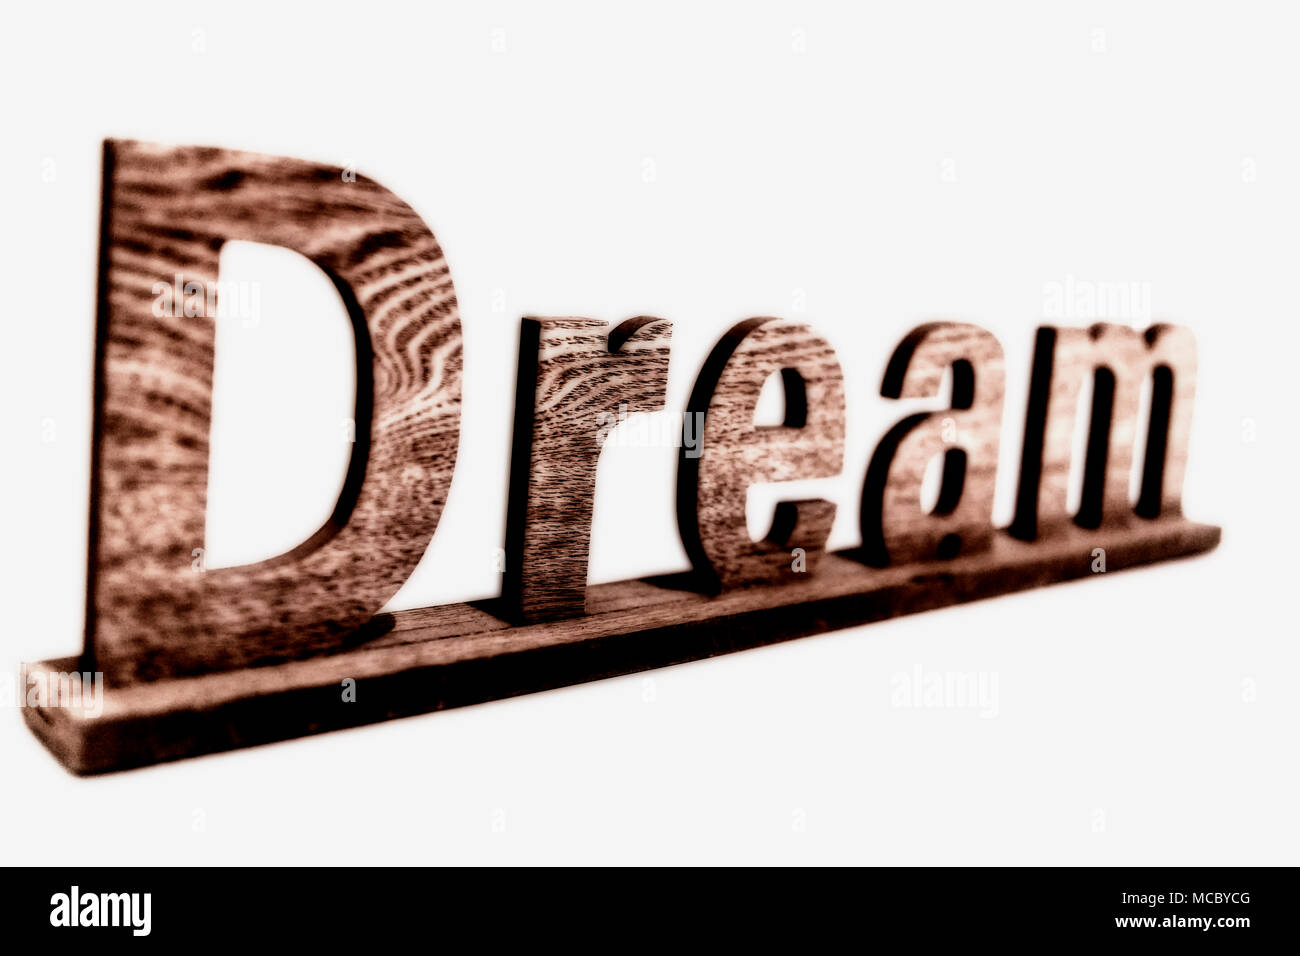 The word „dream“ in wooden letters - isolated in front of a white wall; das Wort “dream” in Holzbuchstaben vor einer weißen Wand Stock Photo